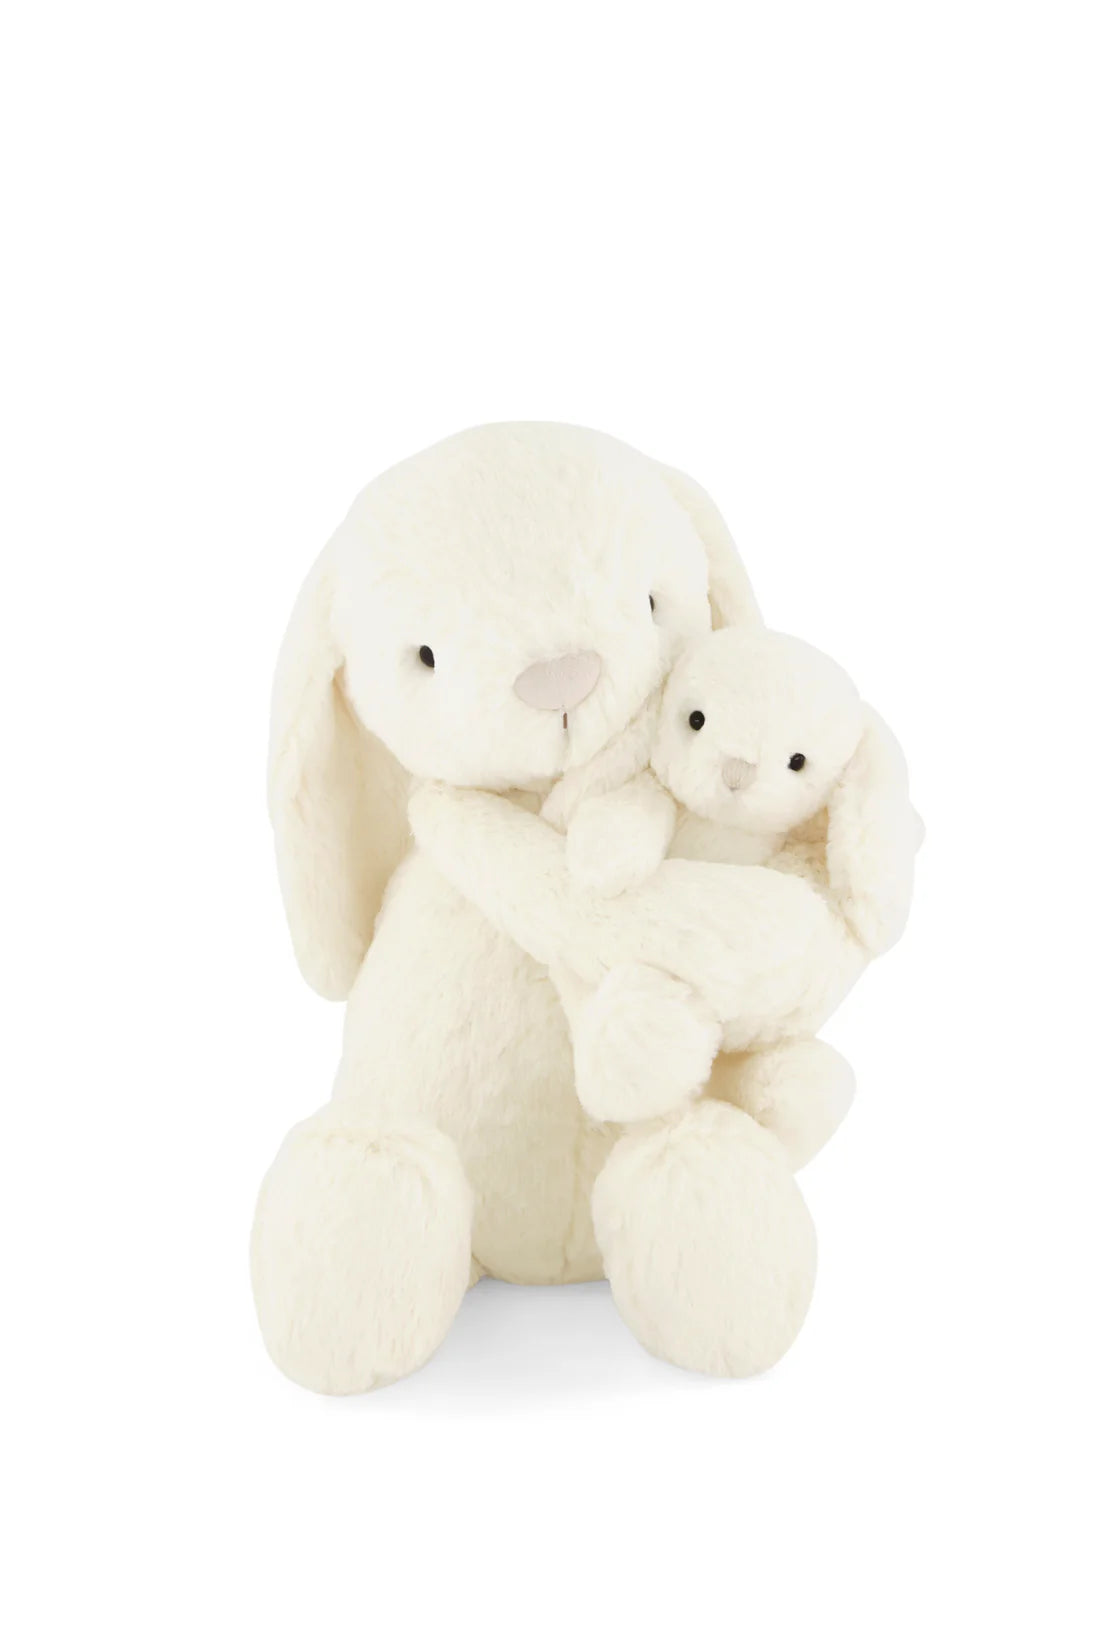 Snuggle Bunnies - Frankie the Hugging Bunny/Marshmallow